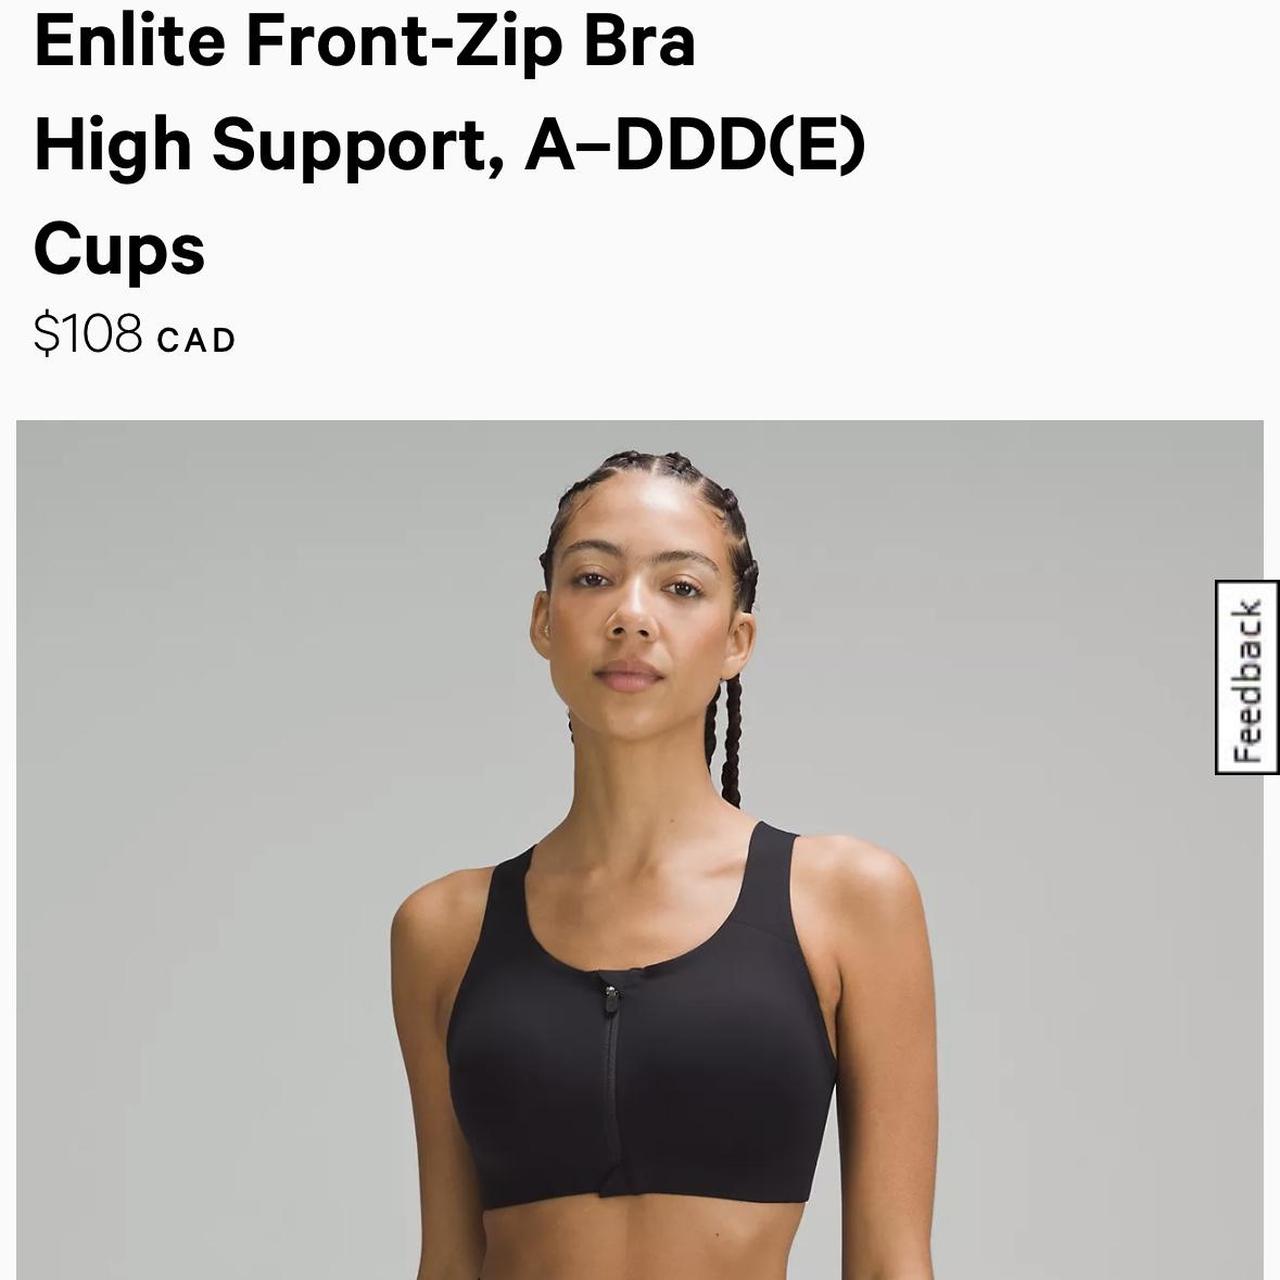 Enlite Front-Zip Bra High Support, A-DDD(E) Cups